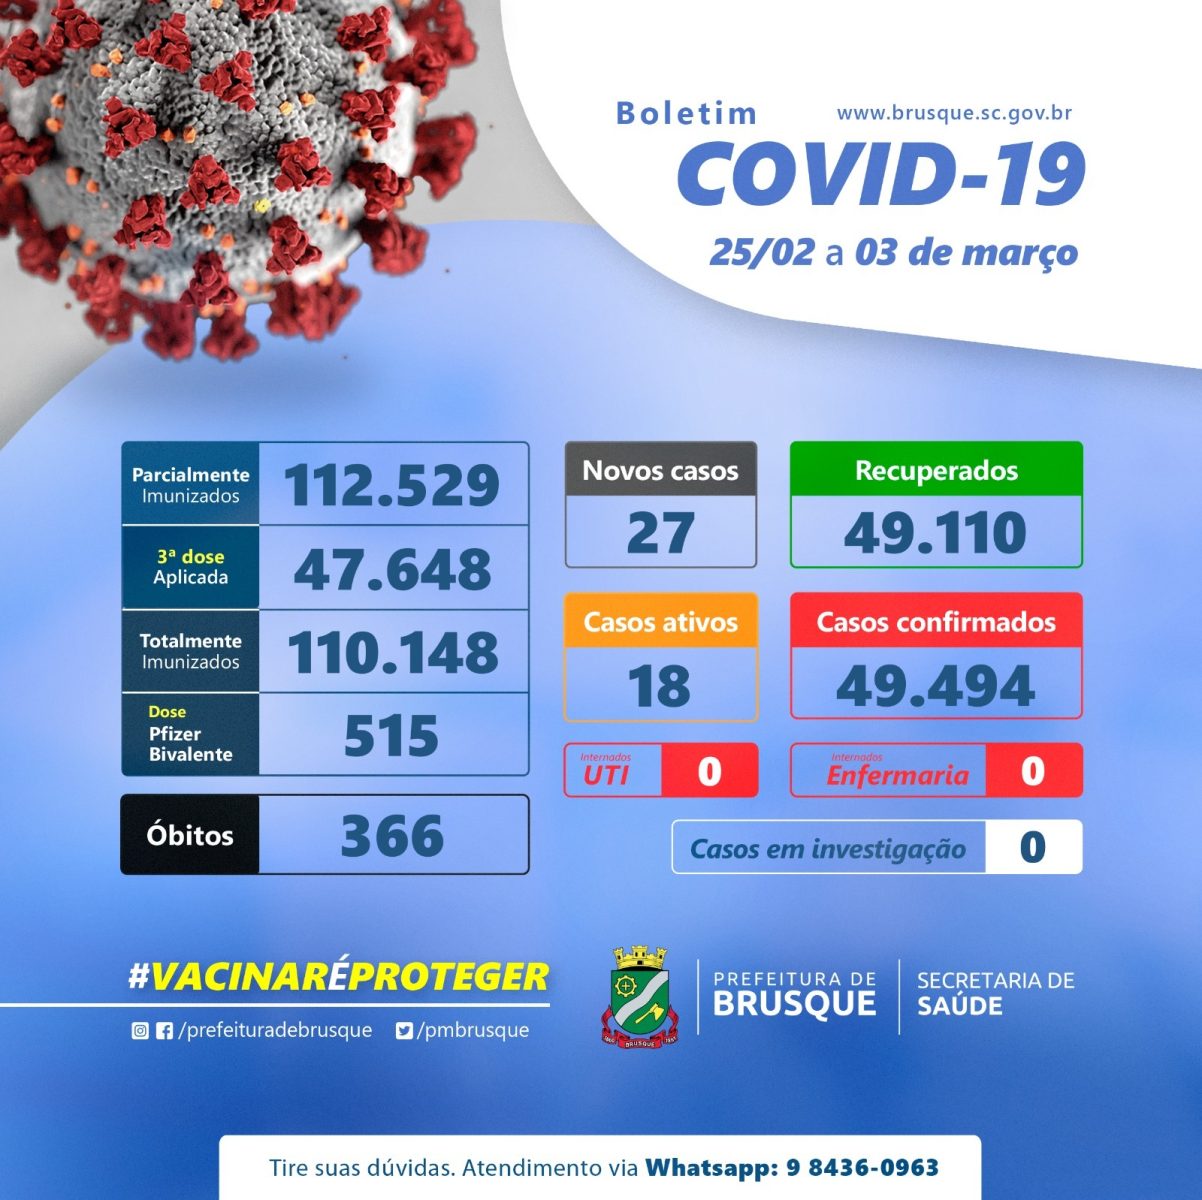 Covid-19: Boletim epidemiológico semanal atualiza números